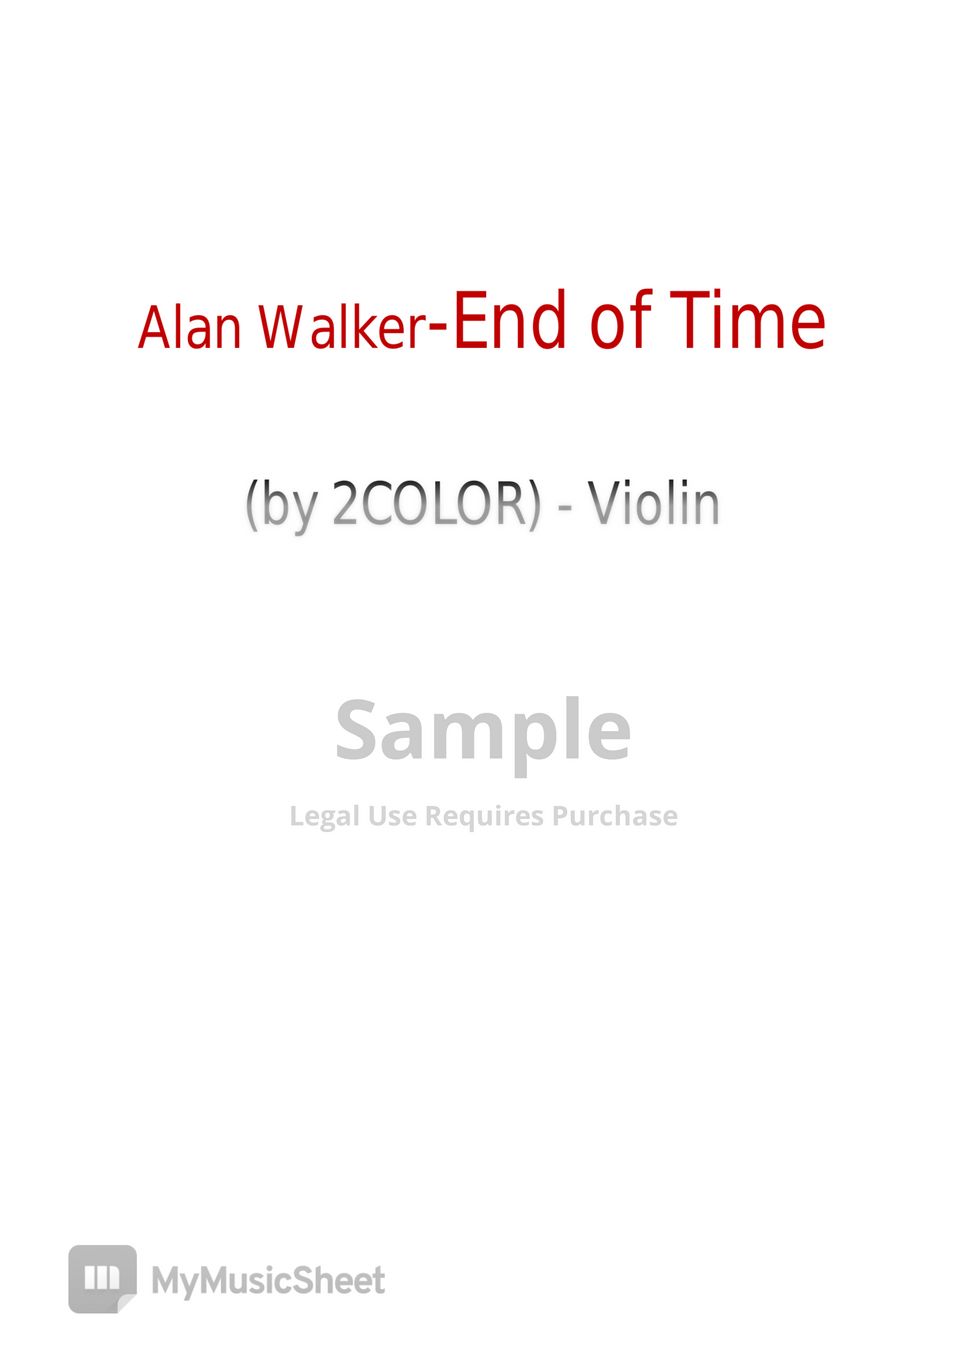 Alan Walker - End of Time by 2COLOR